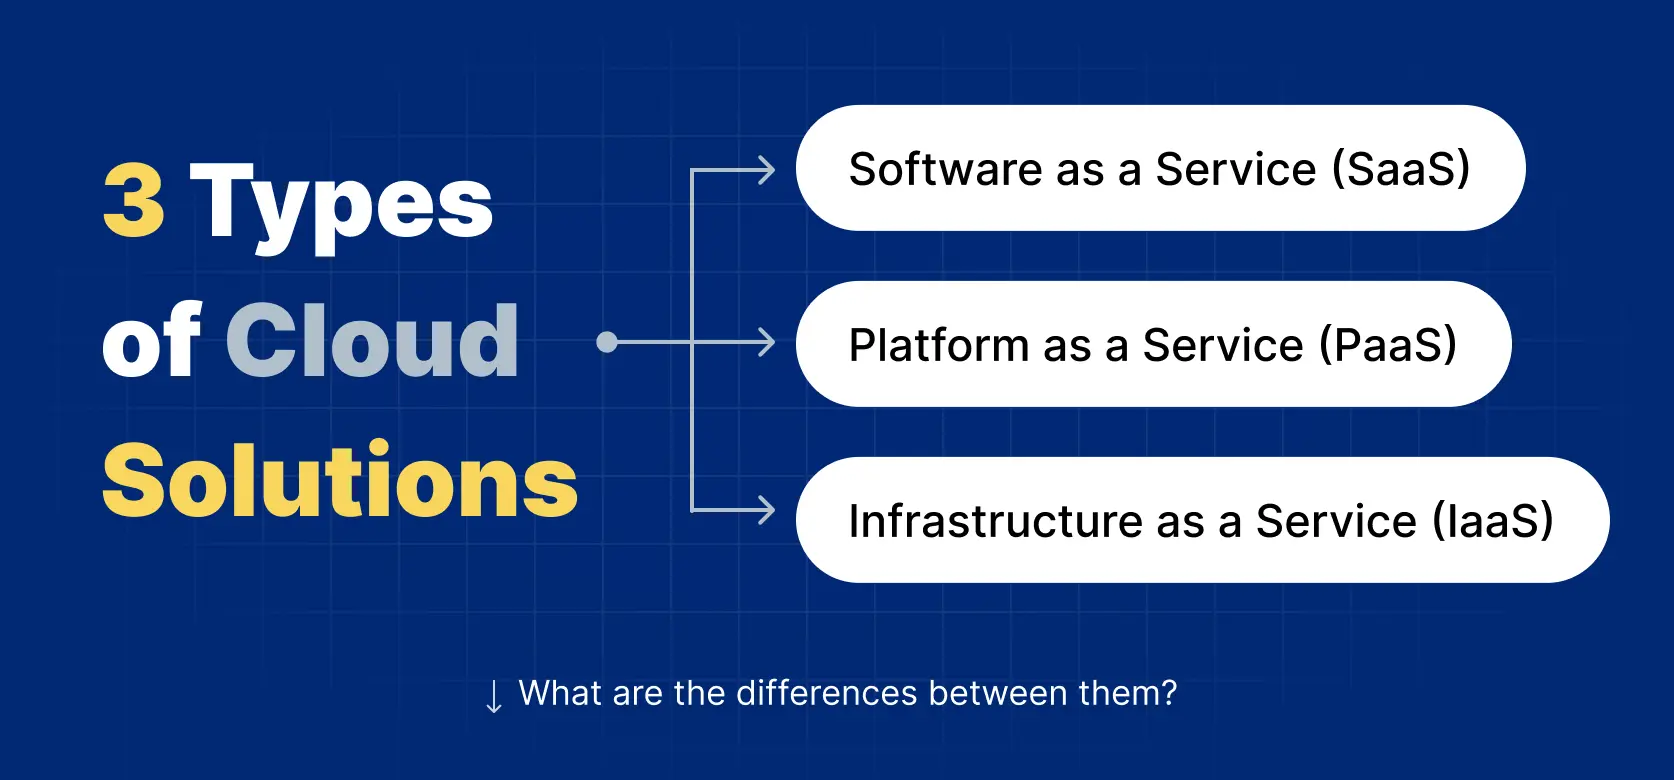 3 Types of Cloud Solutions for Enterprises